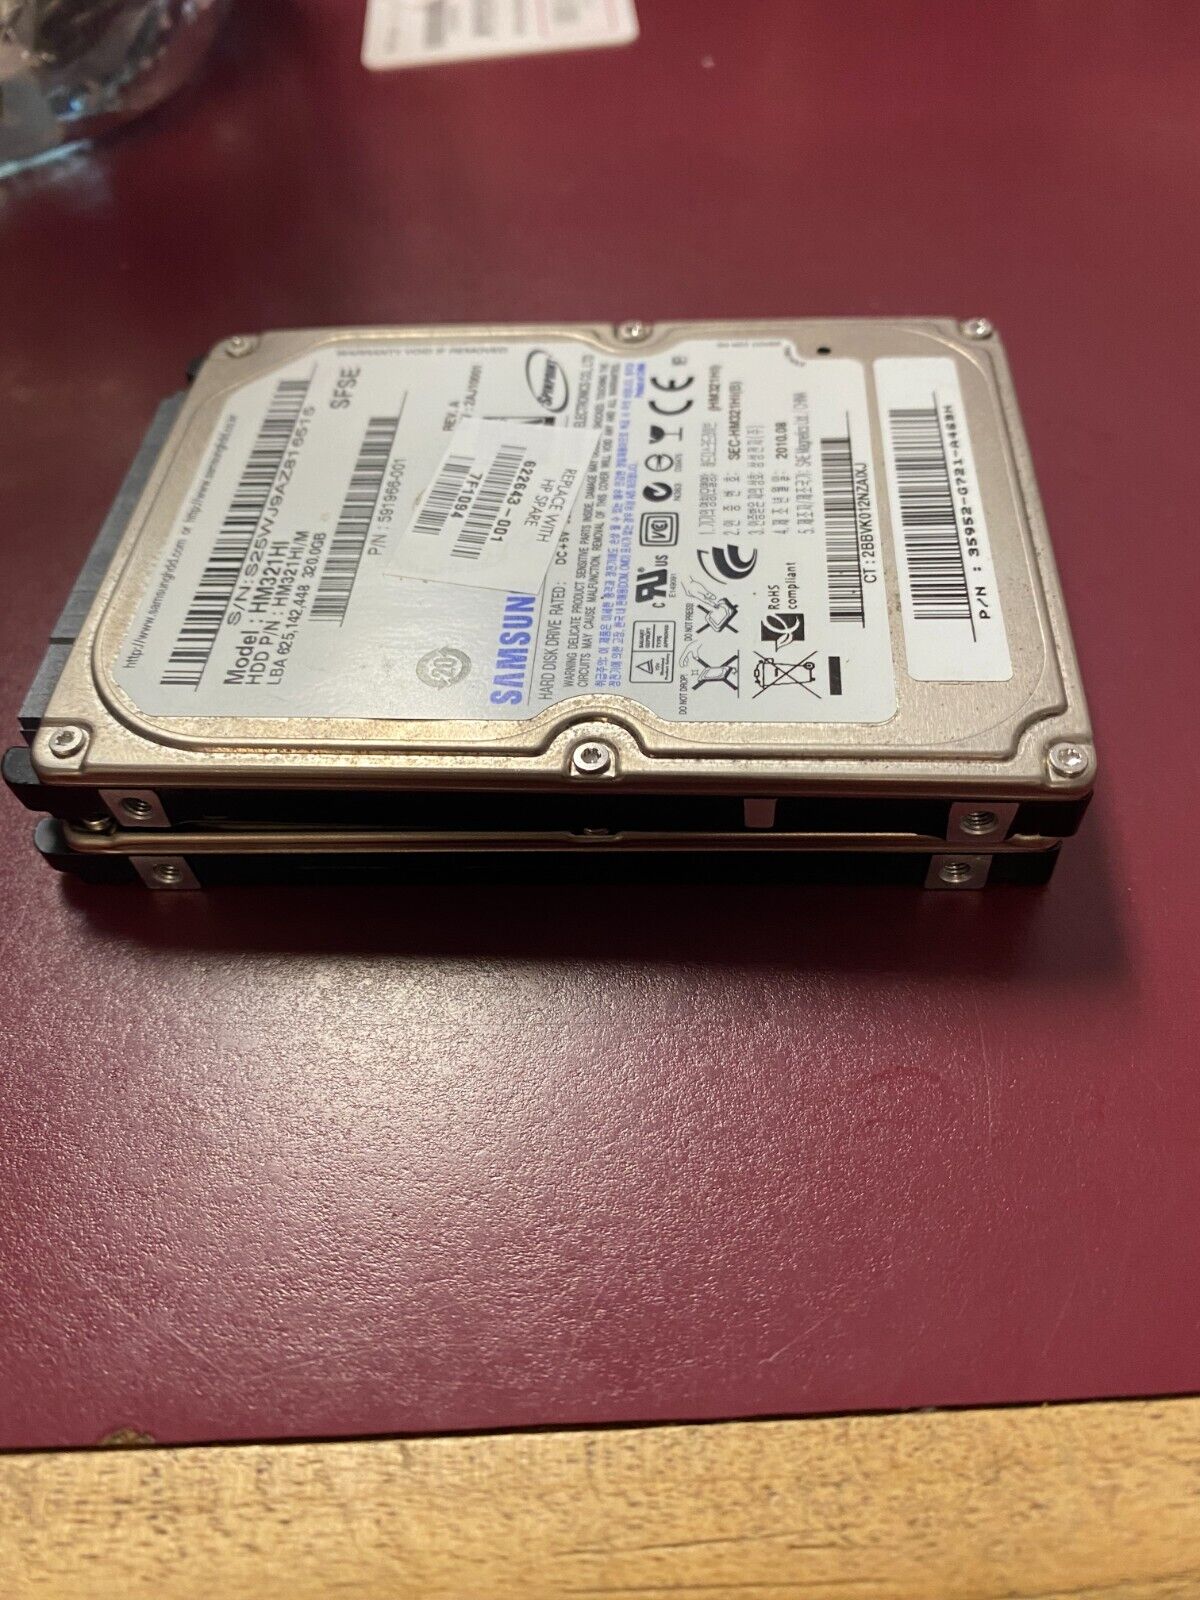 Samsung internal hard disk drives 320 GB (2)